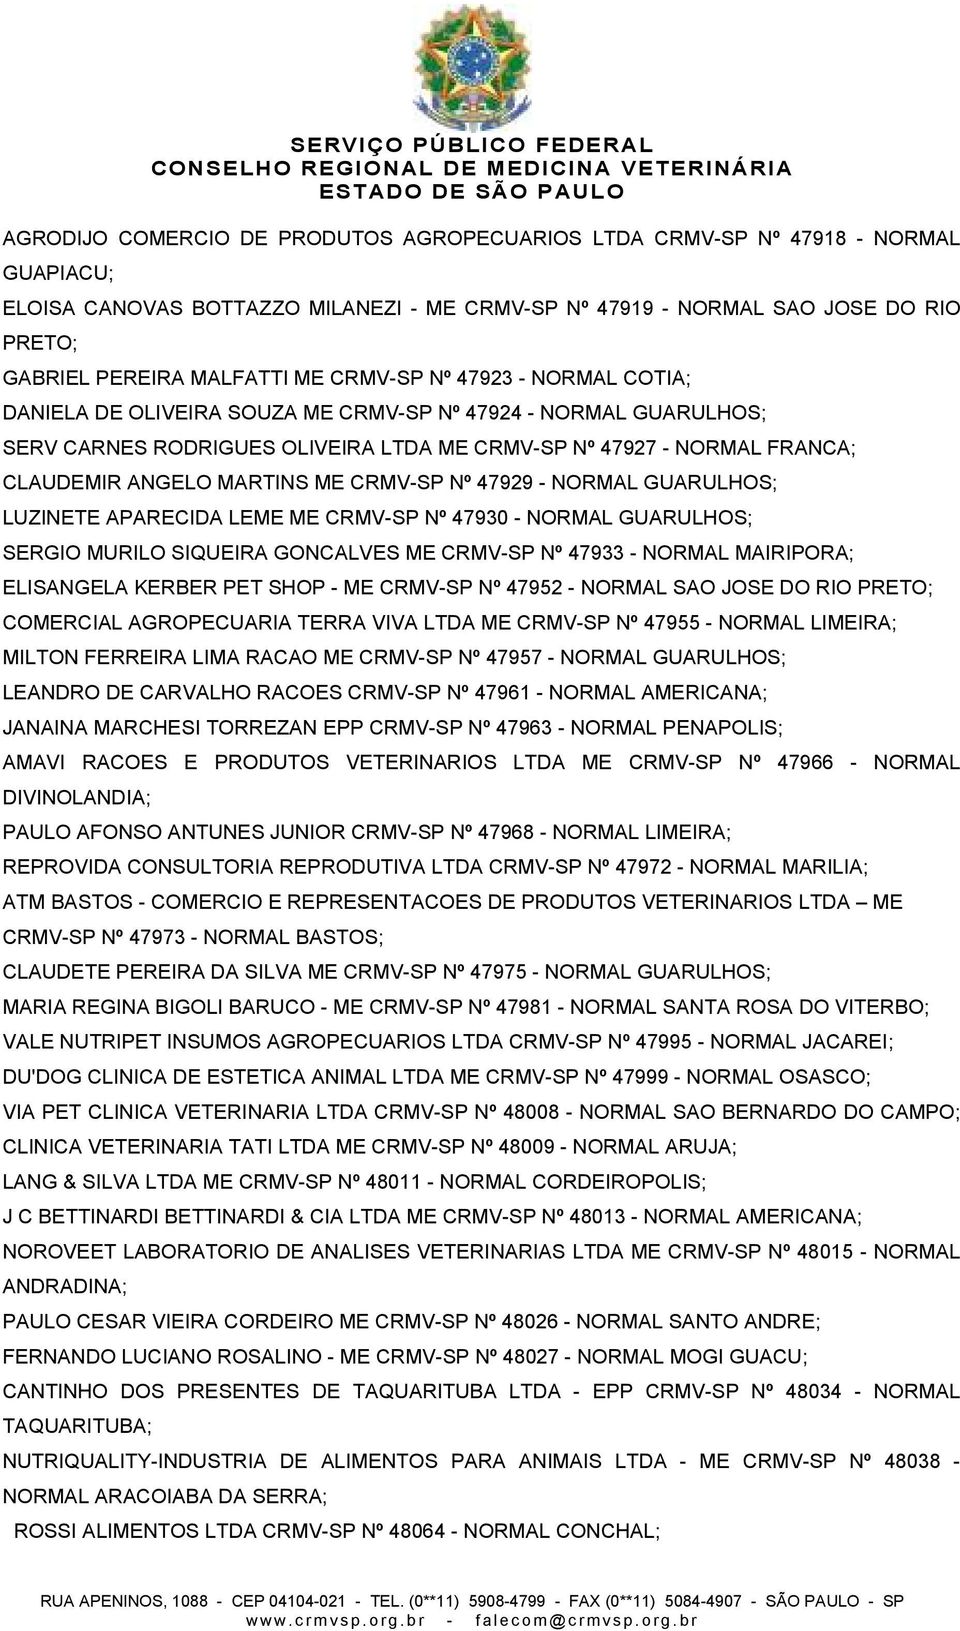 CRMV-SP Nº 47929 - NORMAL GUARULHOS; LUZINETE APARECIDA LEME ME CRMV-SP Nº 47930 - NORMAL GUARULHOS; SERGIO MURILO SIQUEIRA GONCALVES ME CRMV-SP Nº 47933 - NORMAL MAIRIPORA; ELISANGELA KERBER PET